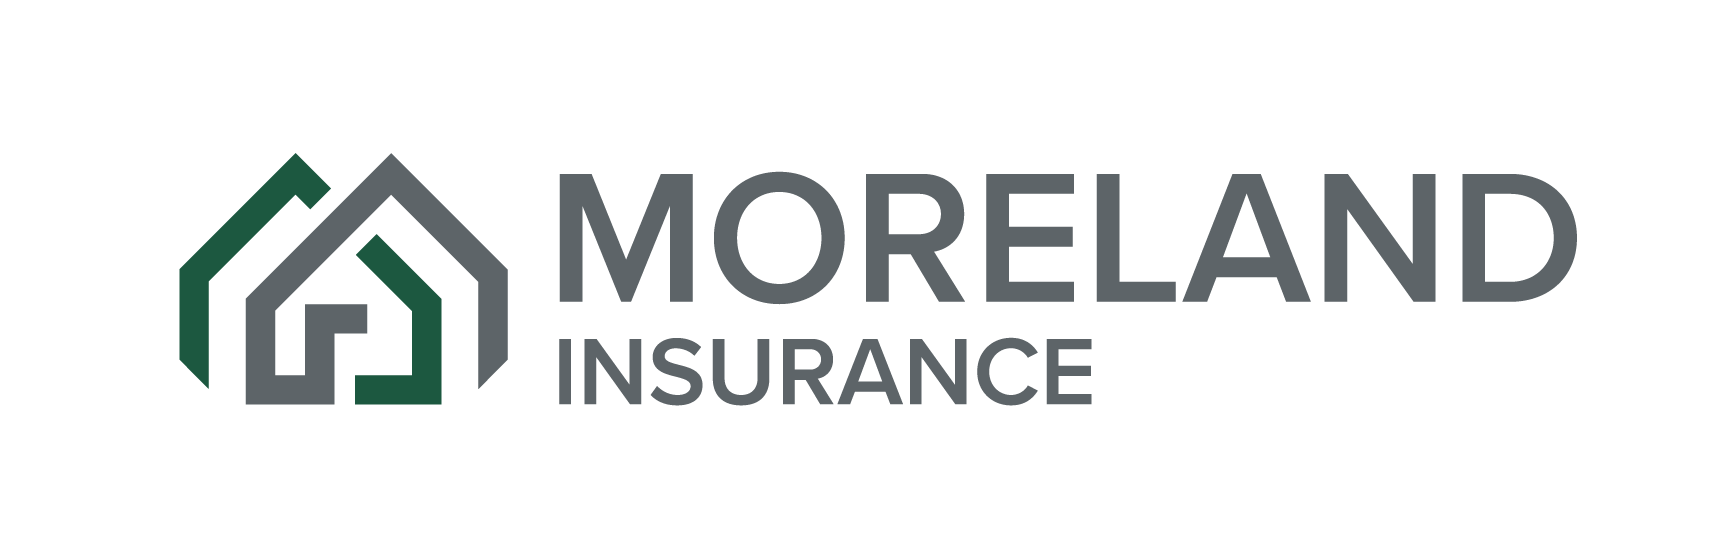 Moreland-Insurance_HZ_Color